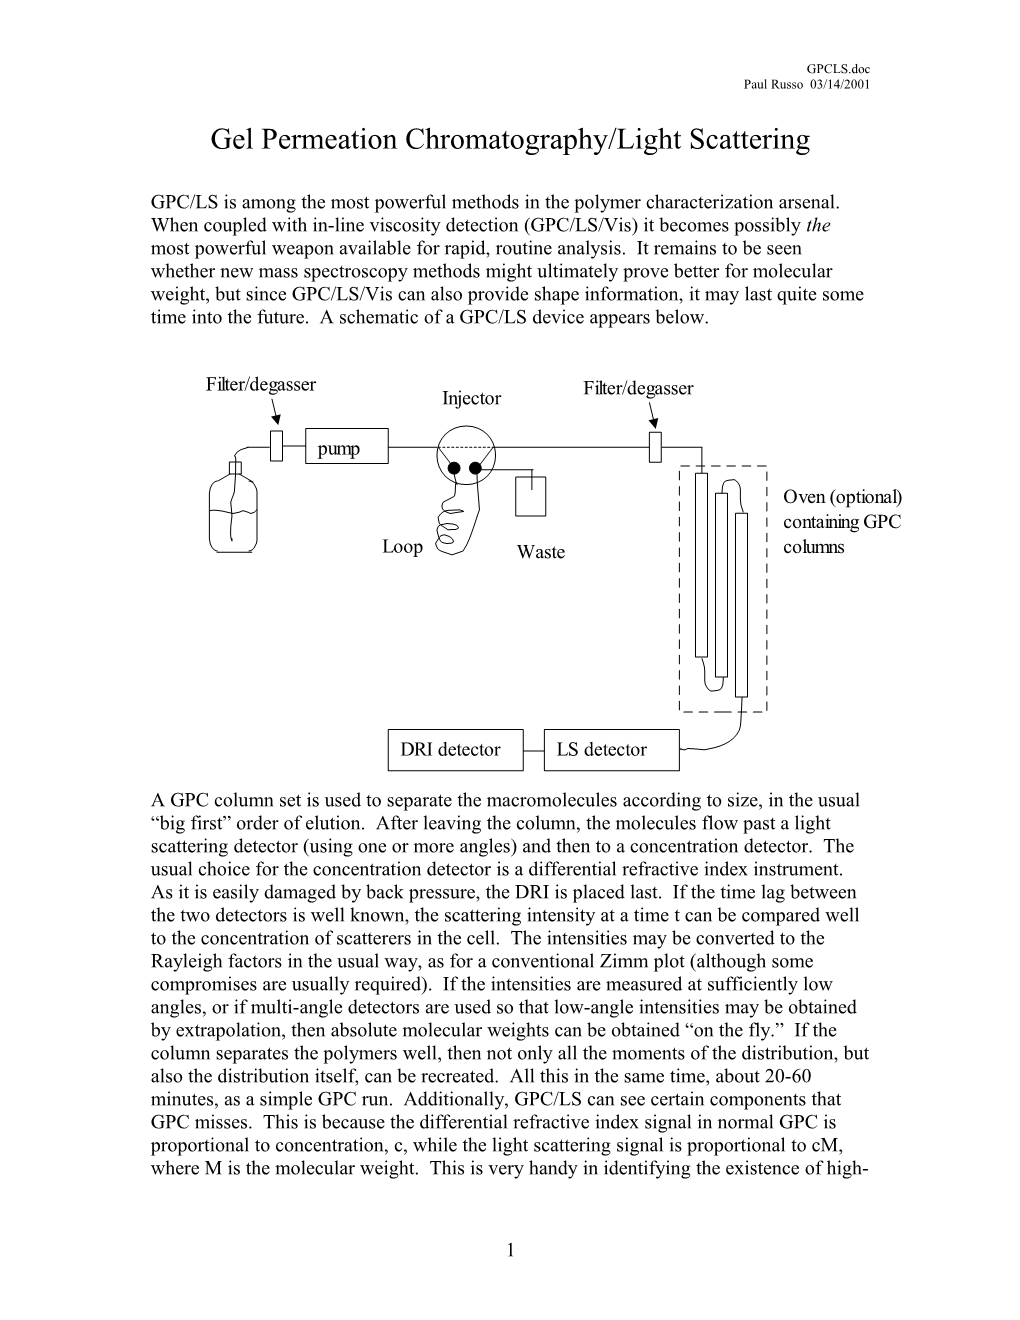 Gel Permeation Chromatography/Light Scattering